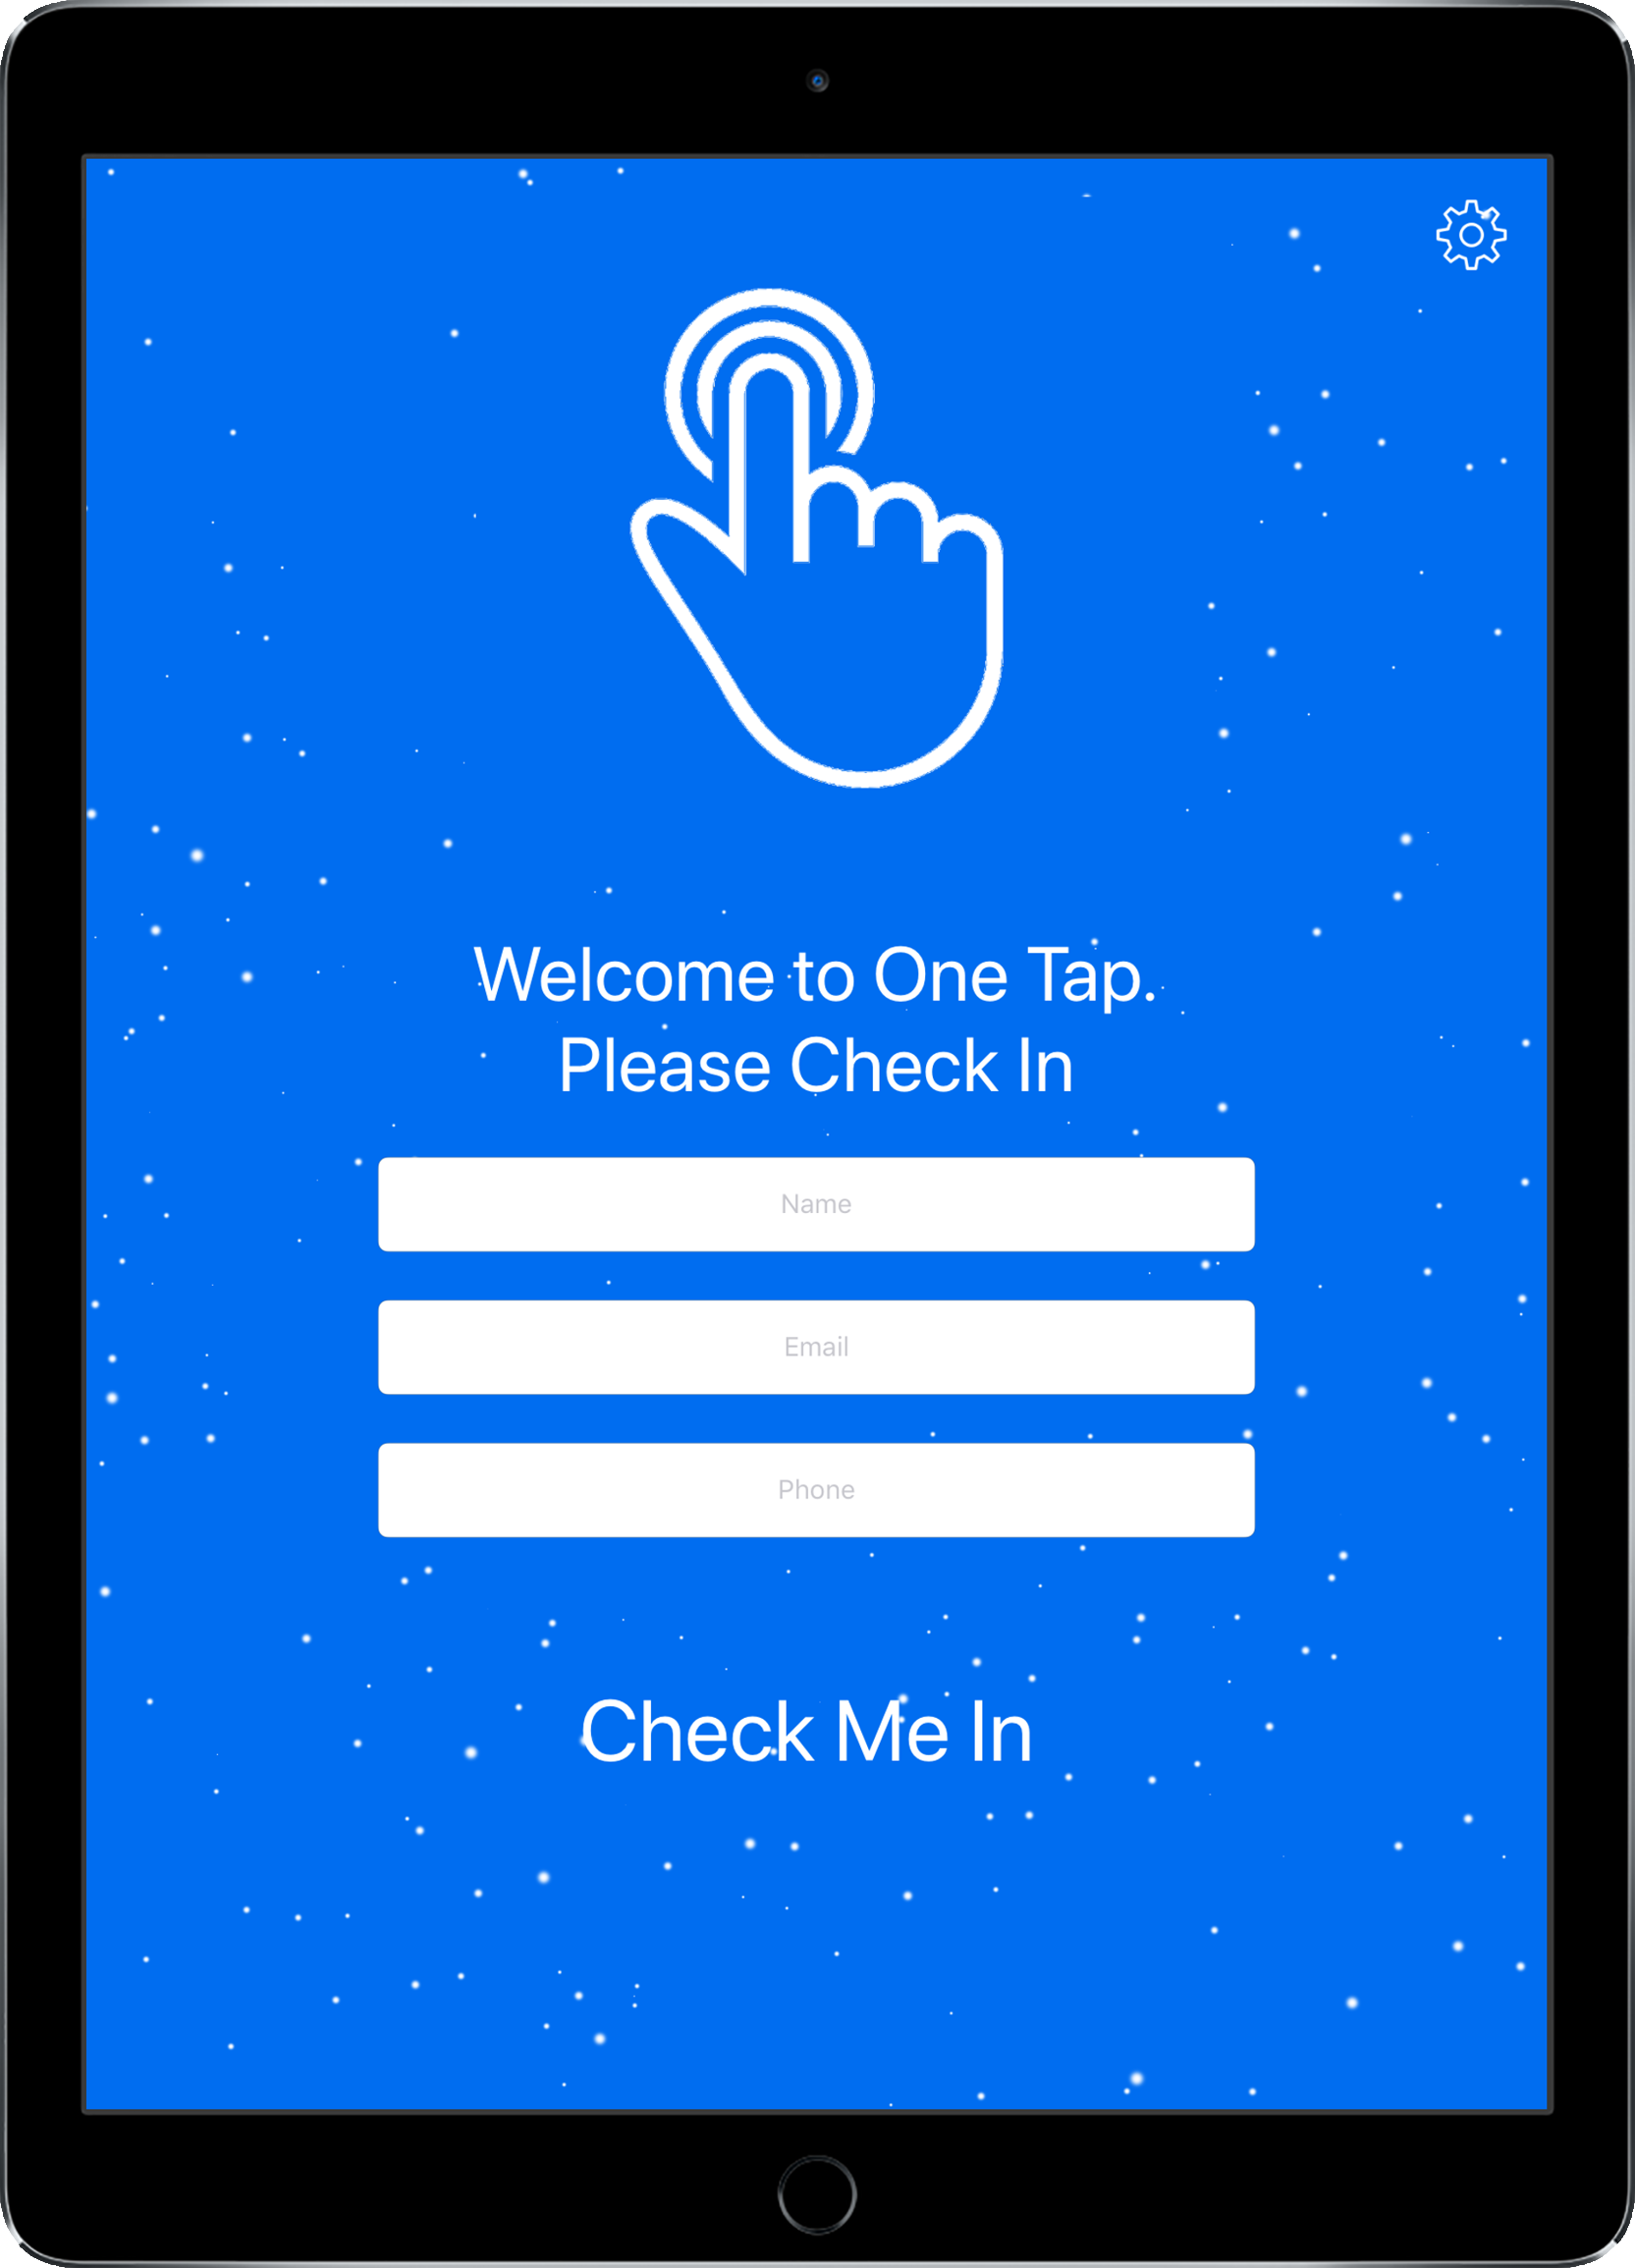 OneTap iOS app for iPad in kiosk mode.